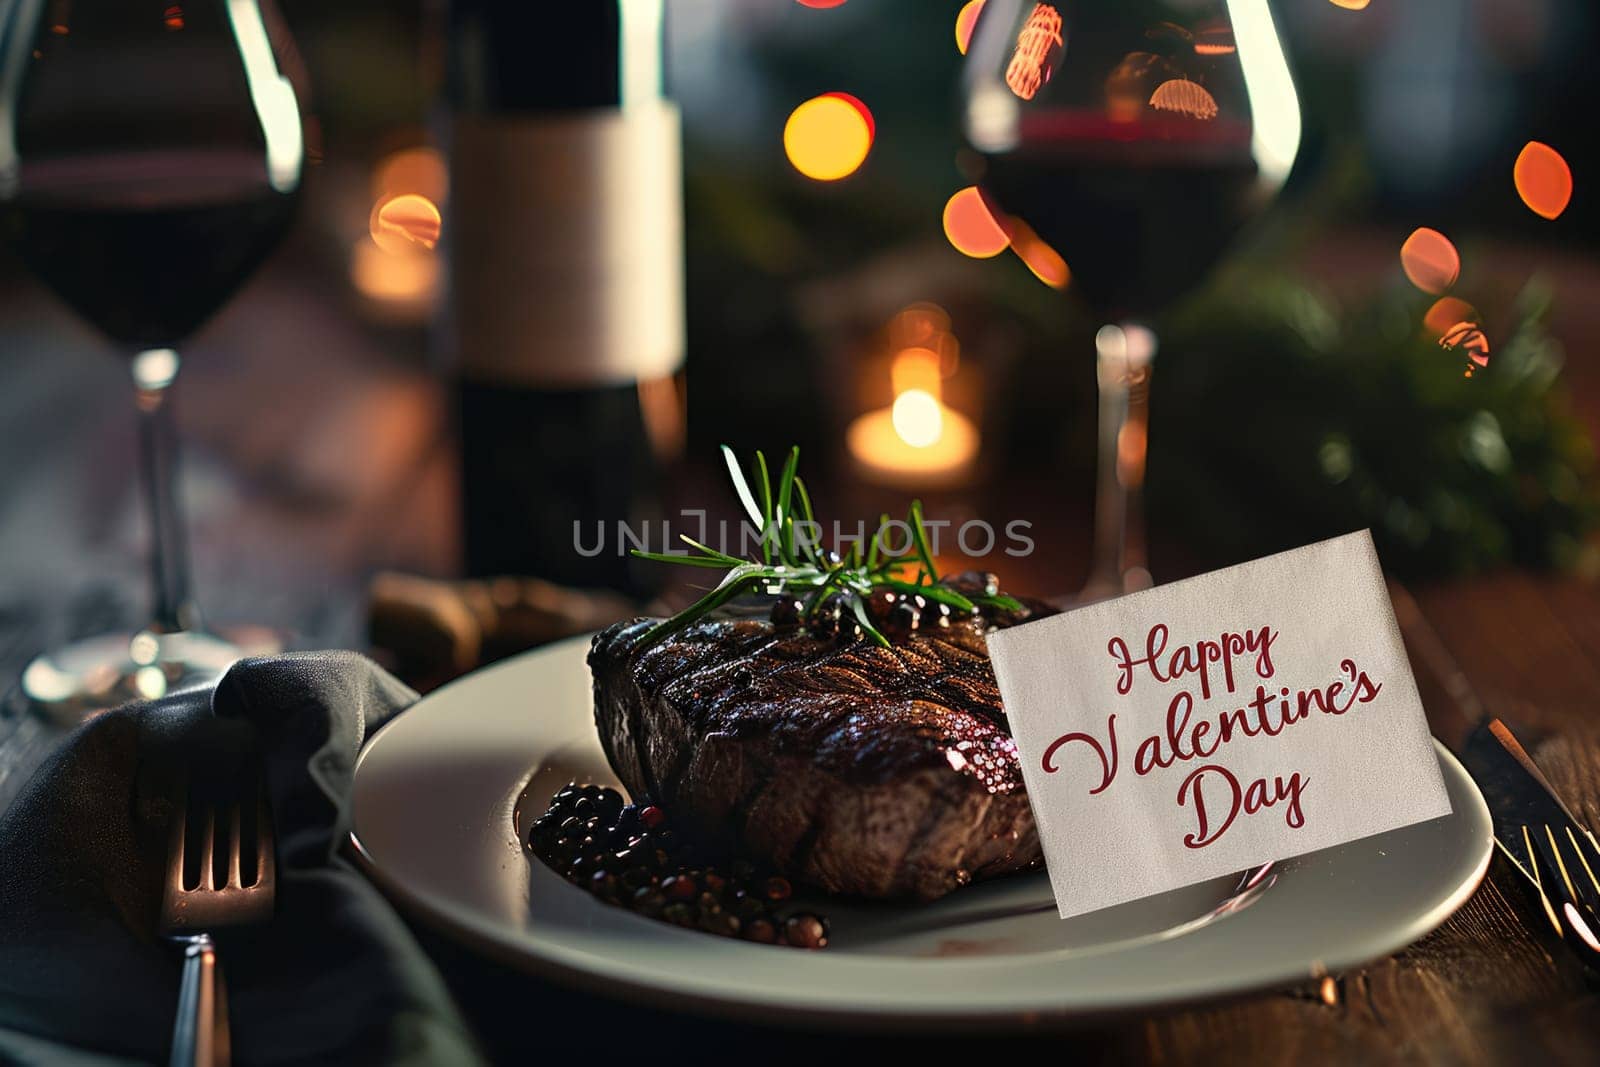 Valentines Day luxurious dinner of steak and wine in restaurant pragma by biancoblue